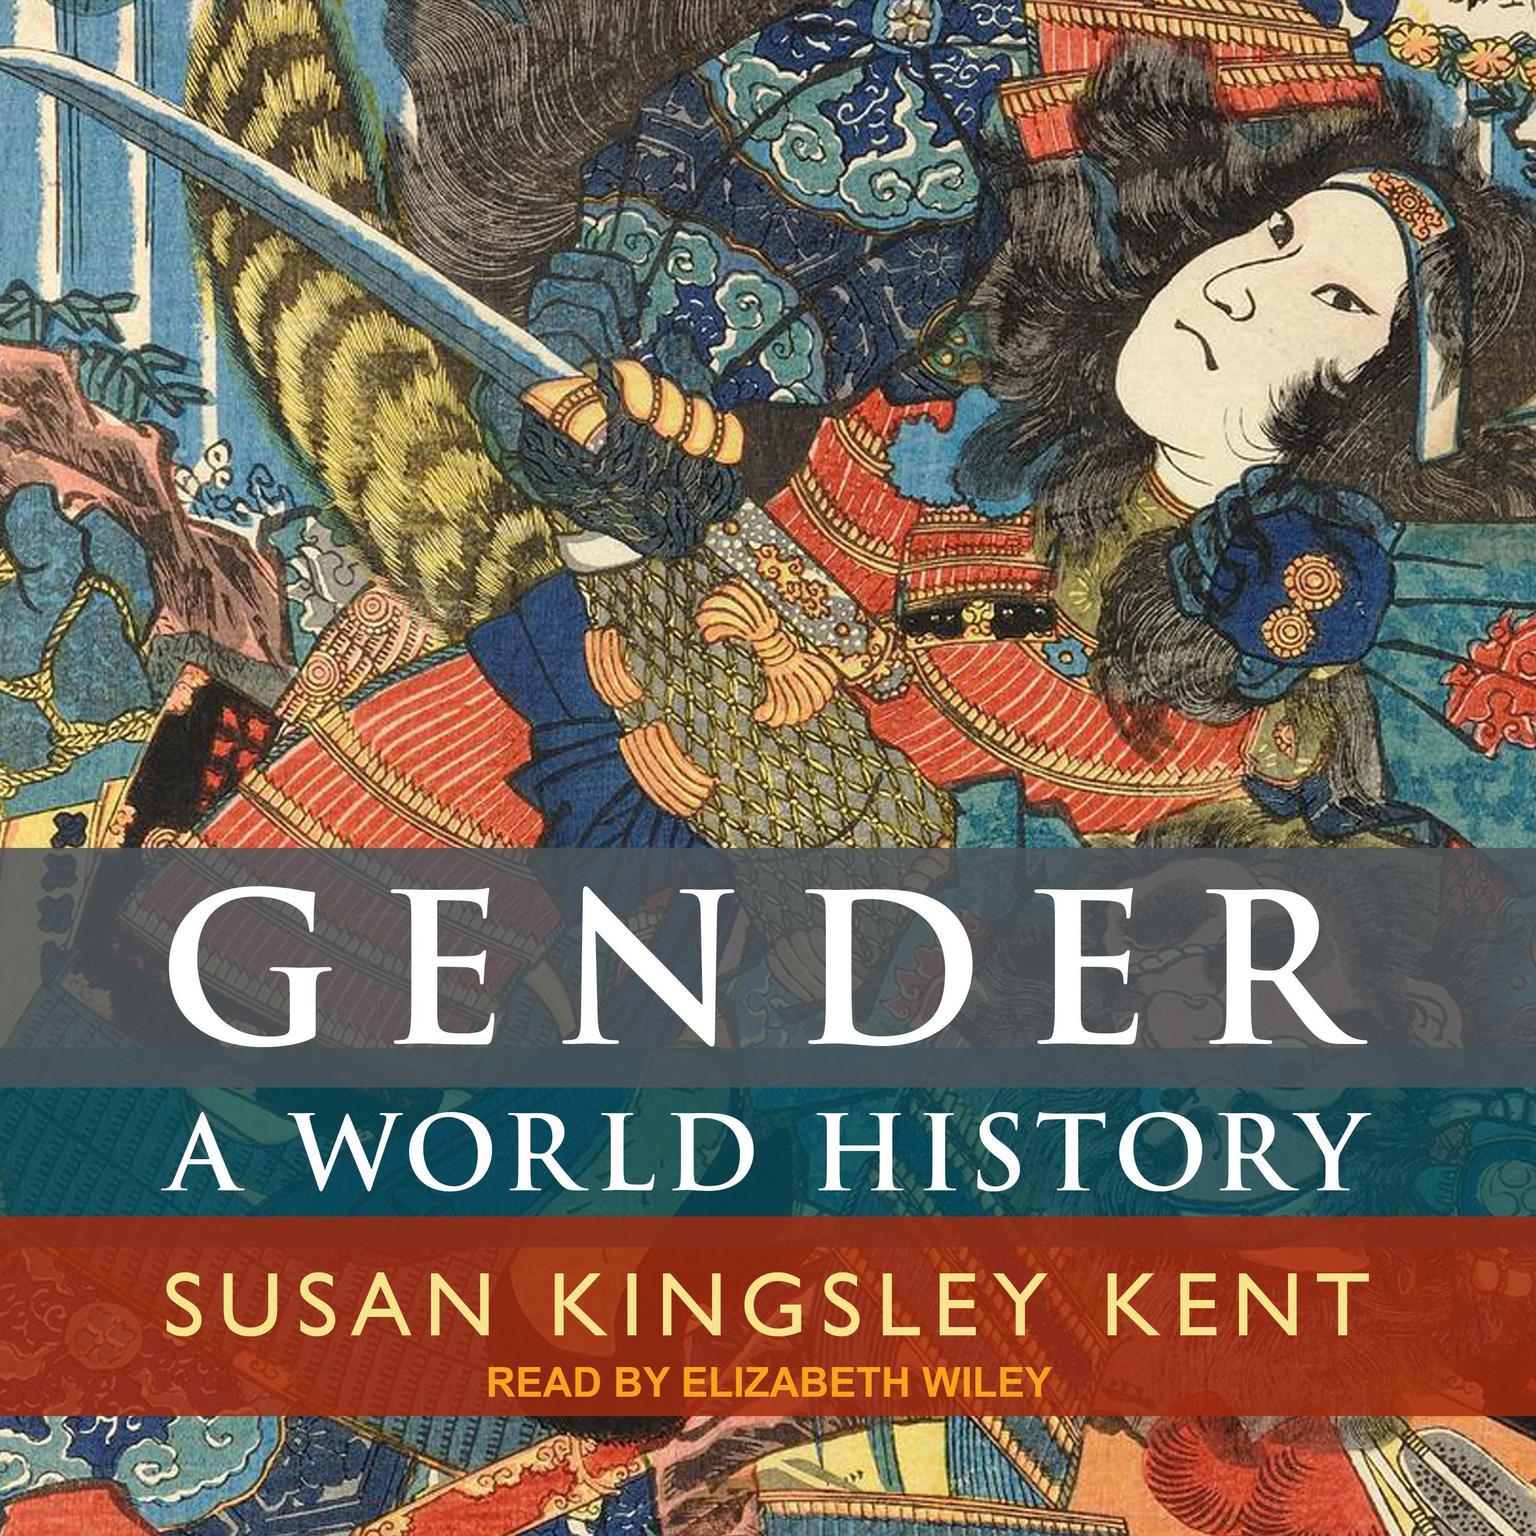 Gender: A World History Audiobook, by Susan Kingsley Kent